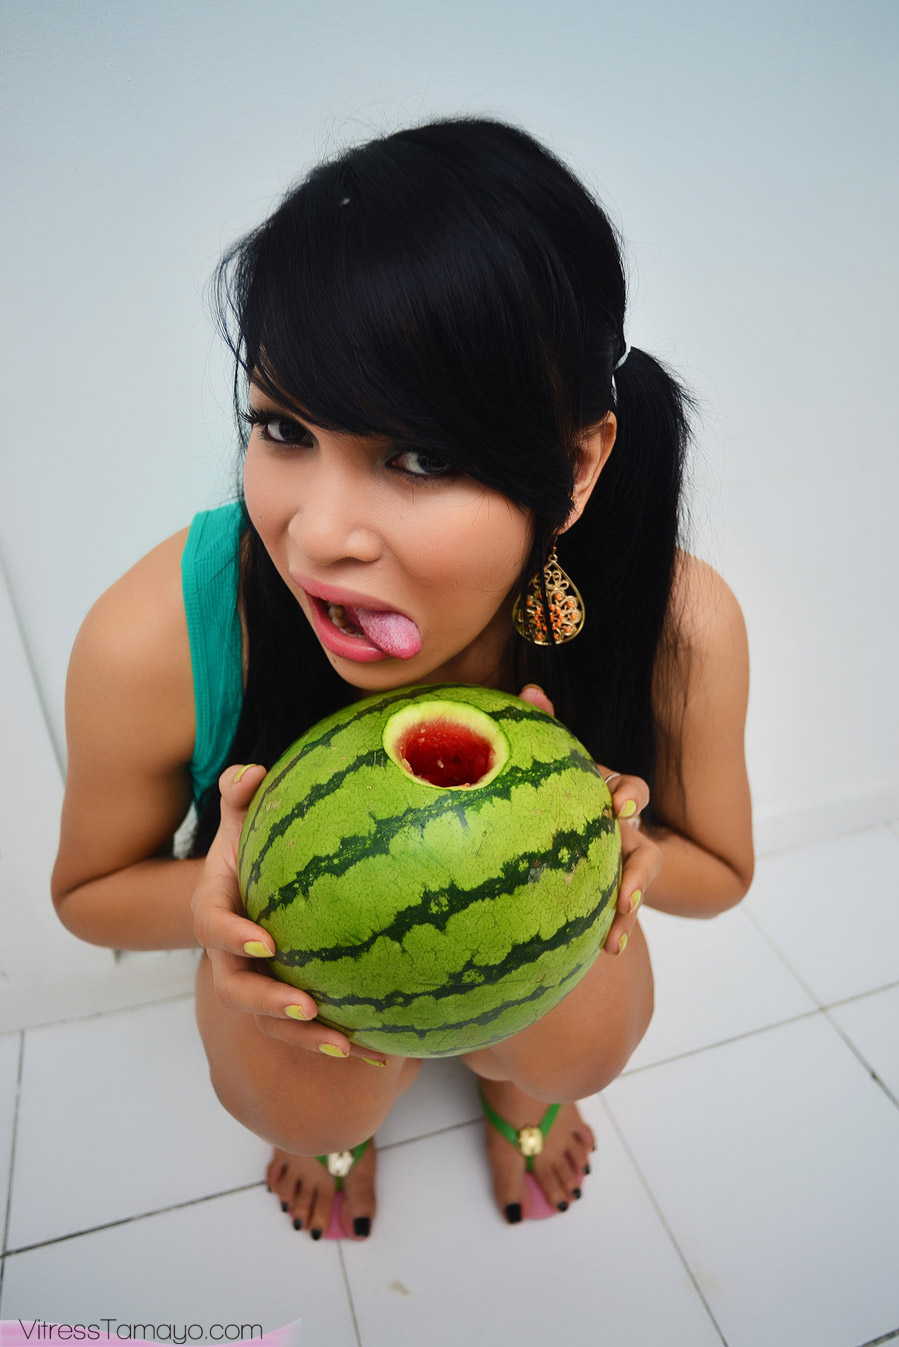 A Shemale Fucking Fruit - Petite Asian shemale with Big Tits fucking a watermelon ...